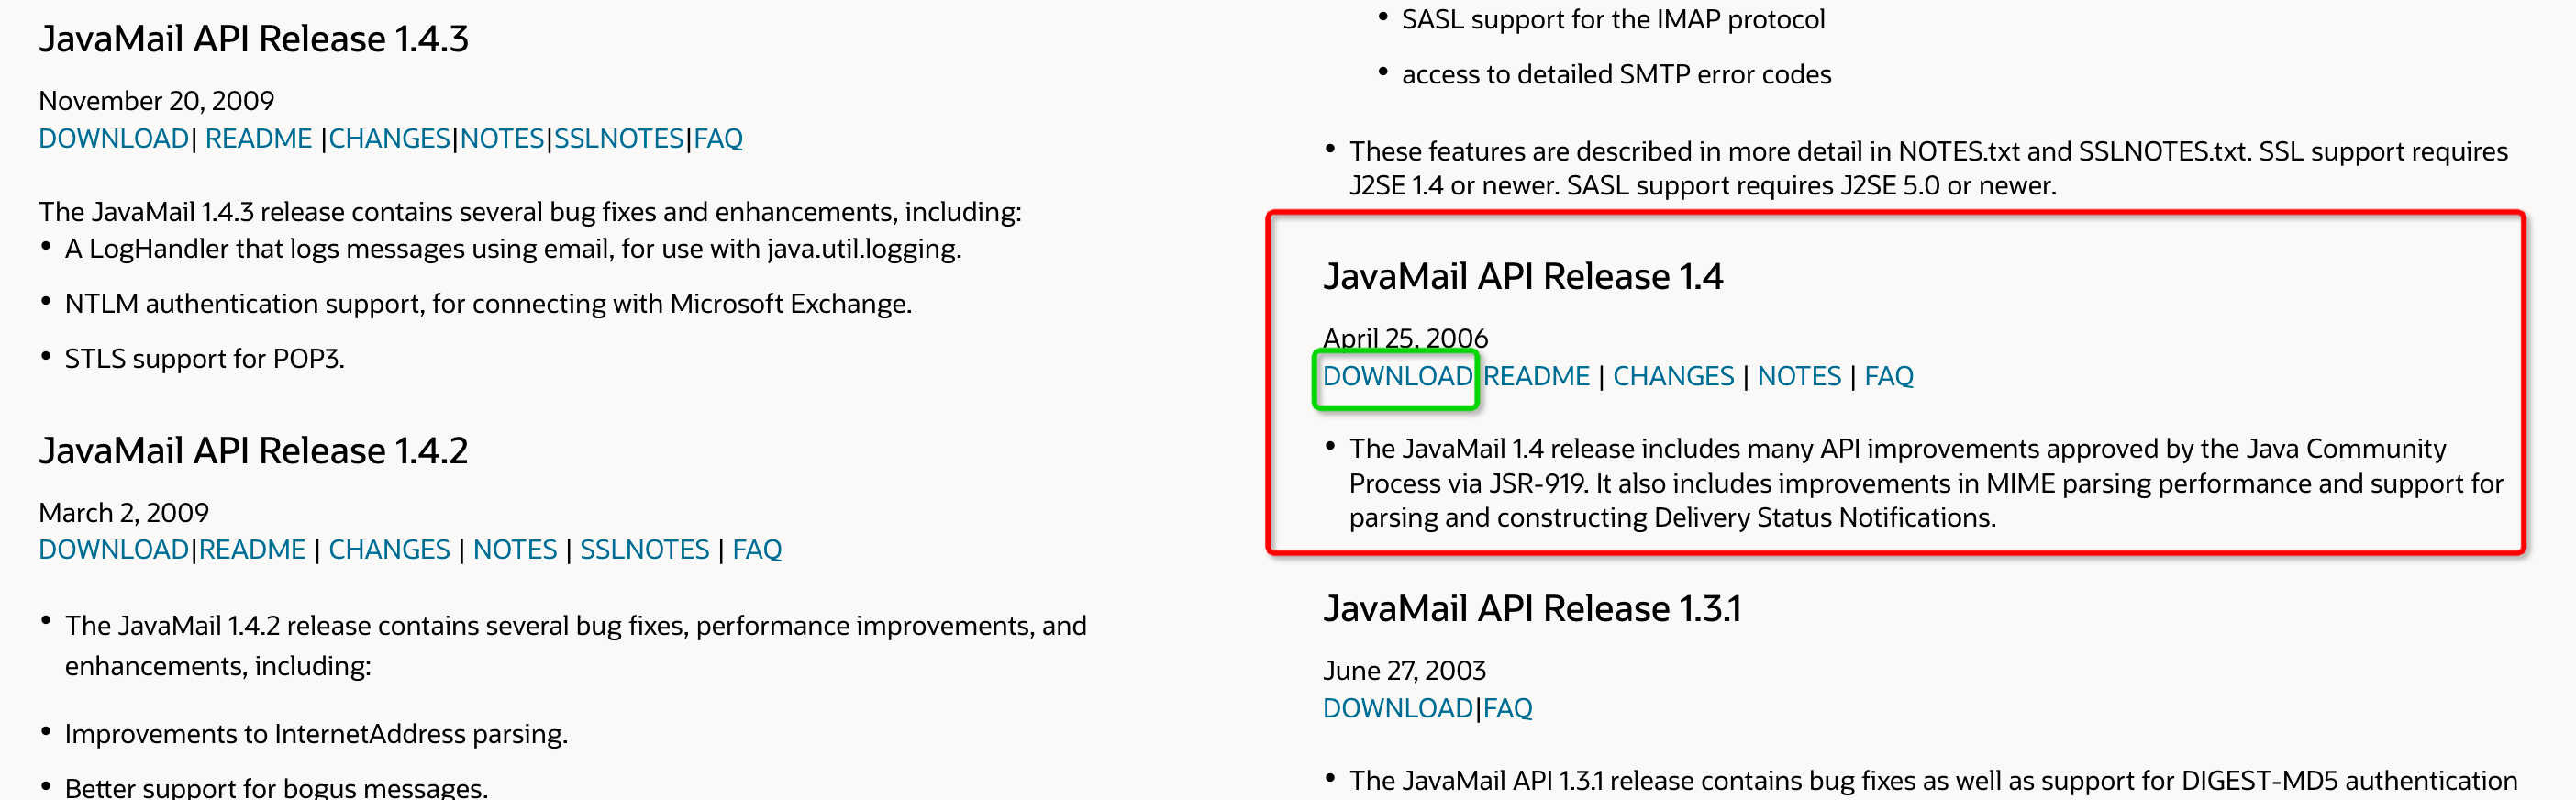 图1 JavaMail API 文档